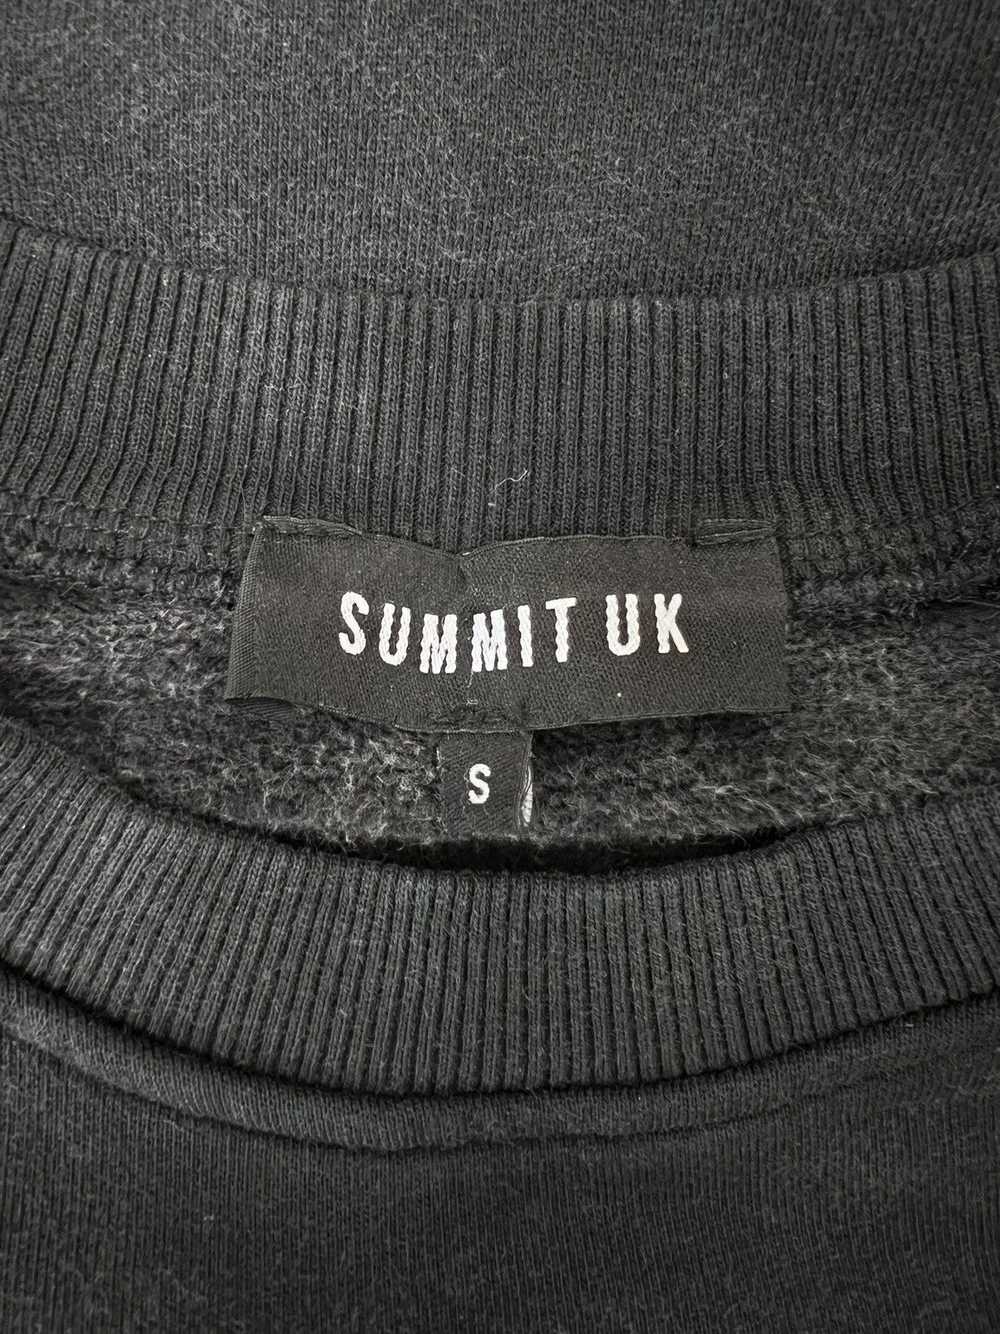 Summit Clothing Summit UK Raglan Crew in Washed B… - image 3